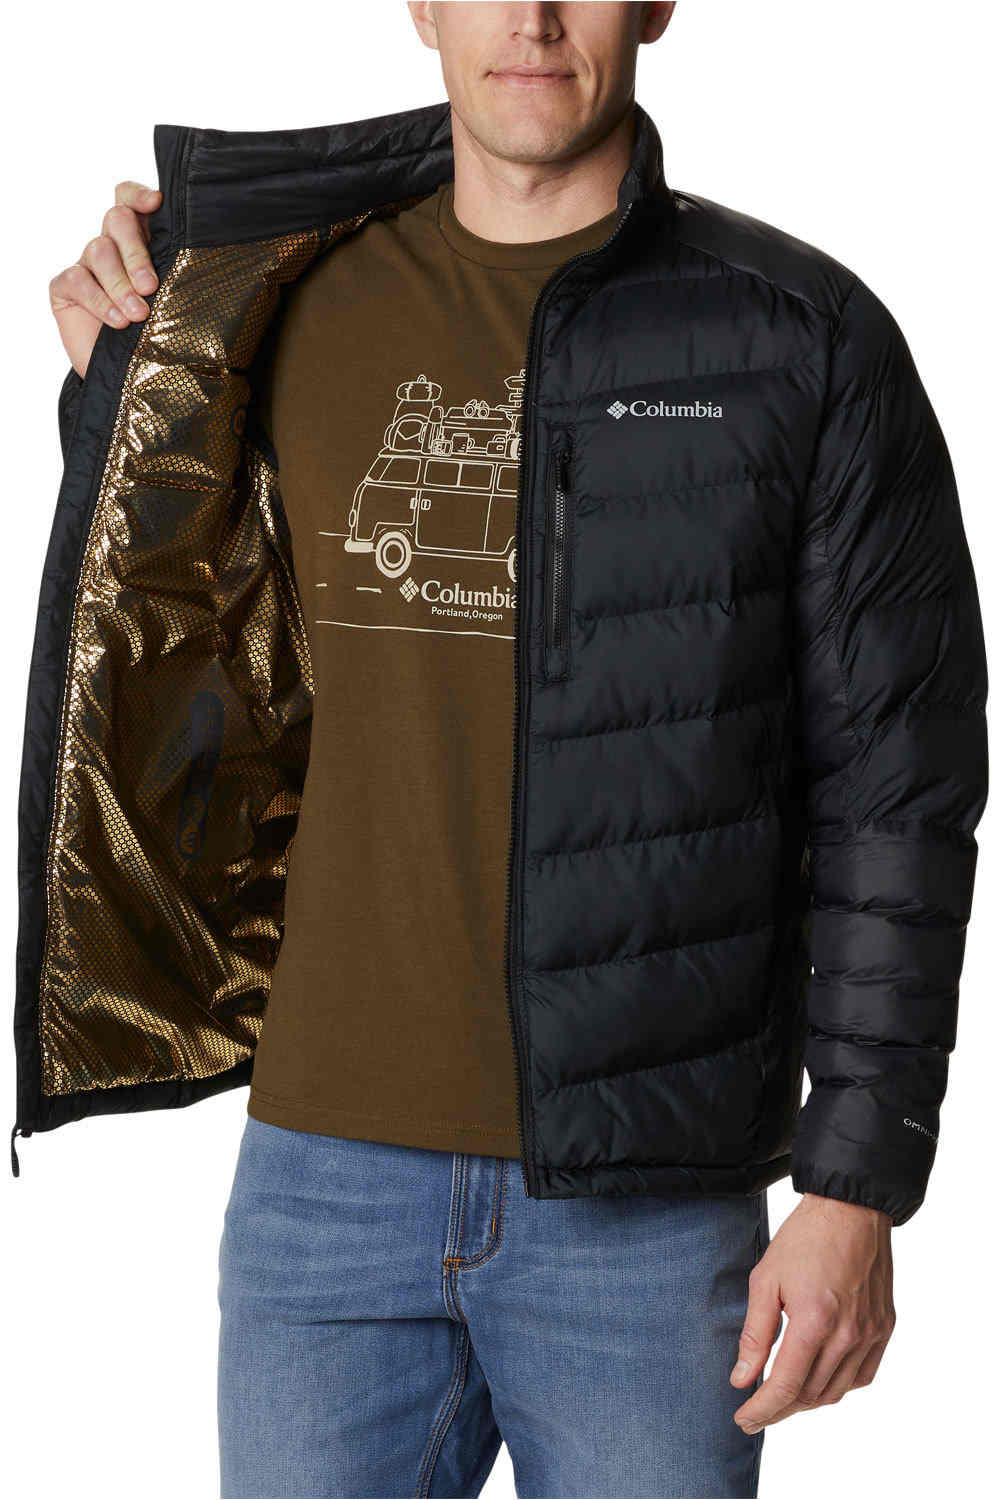 Columbia chaqueta outdoor hombre Labyrinth Loop Jacket vista trasera